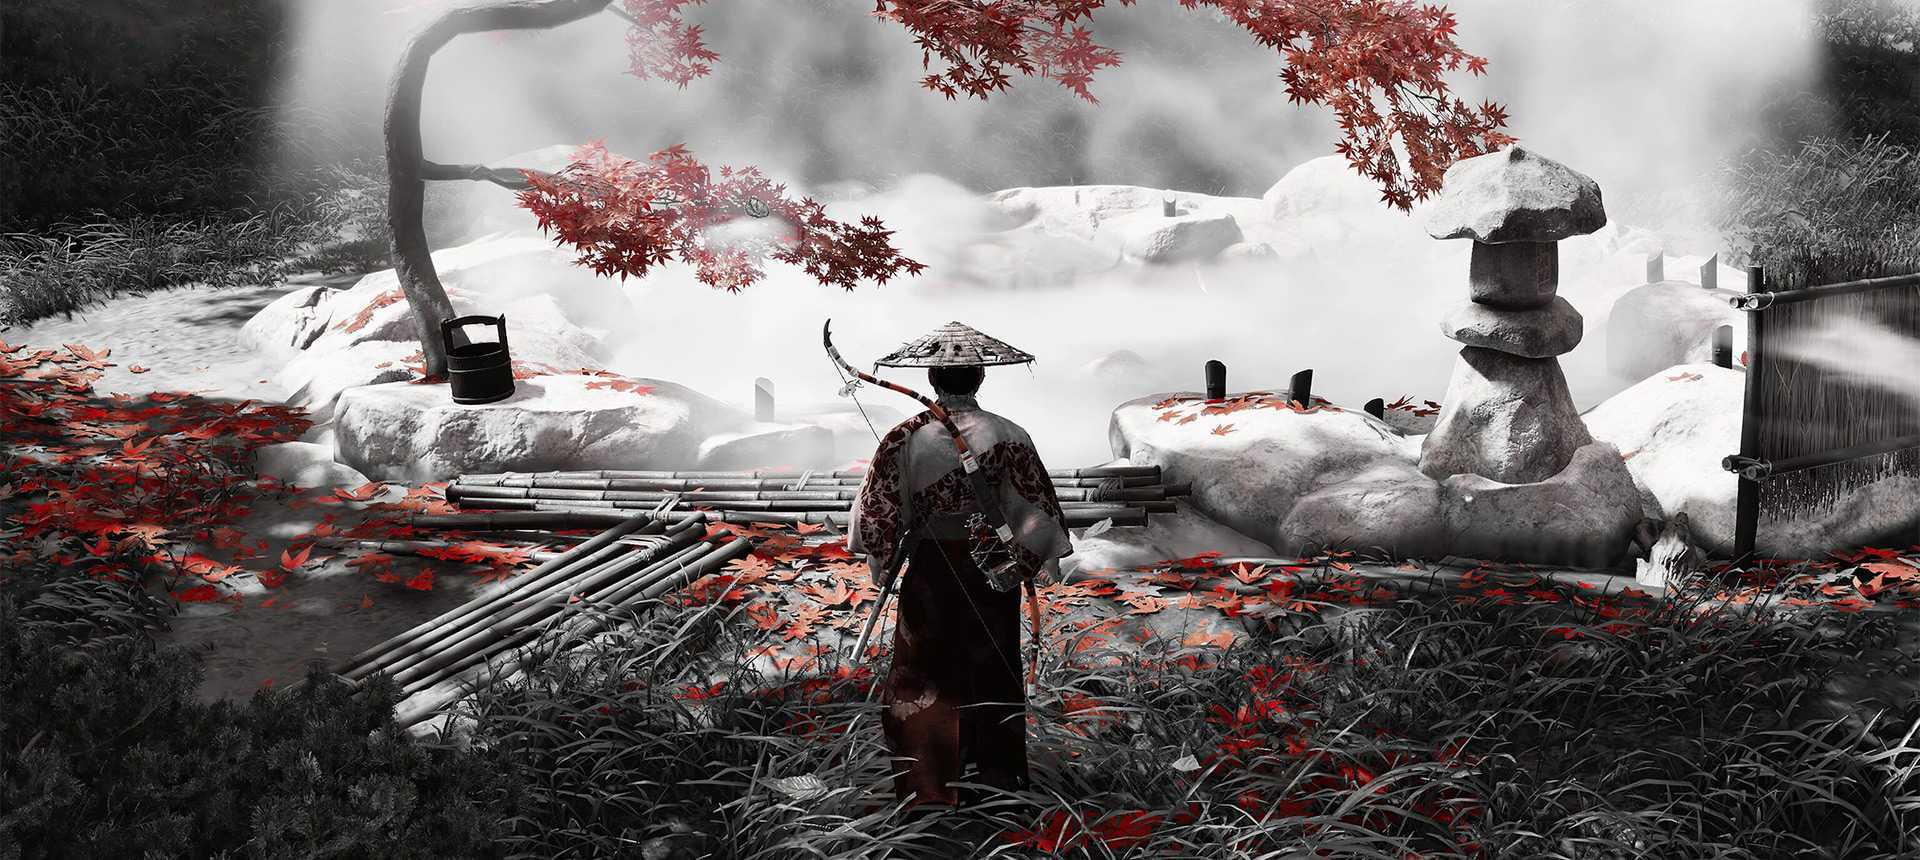 Ghost of Tsushima - Часть 2. Печеньки спасают самурая.